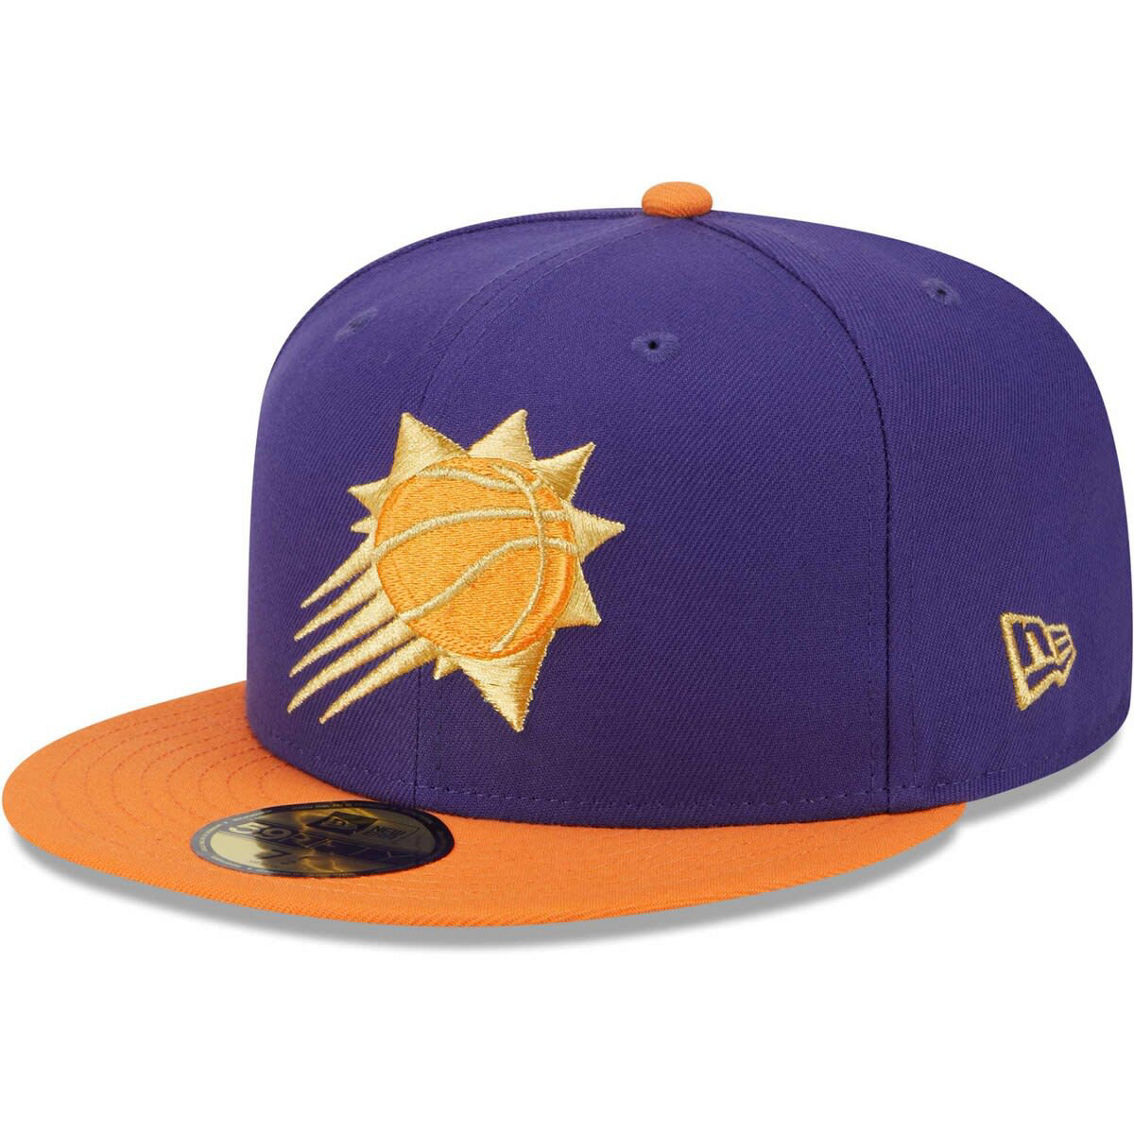 New Era Men's Purple/Orange Phoenix Suns Gameday Gold Pop Stars 59FIFTY Fitted Hat - Image 4 of 4